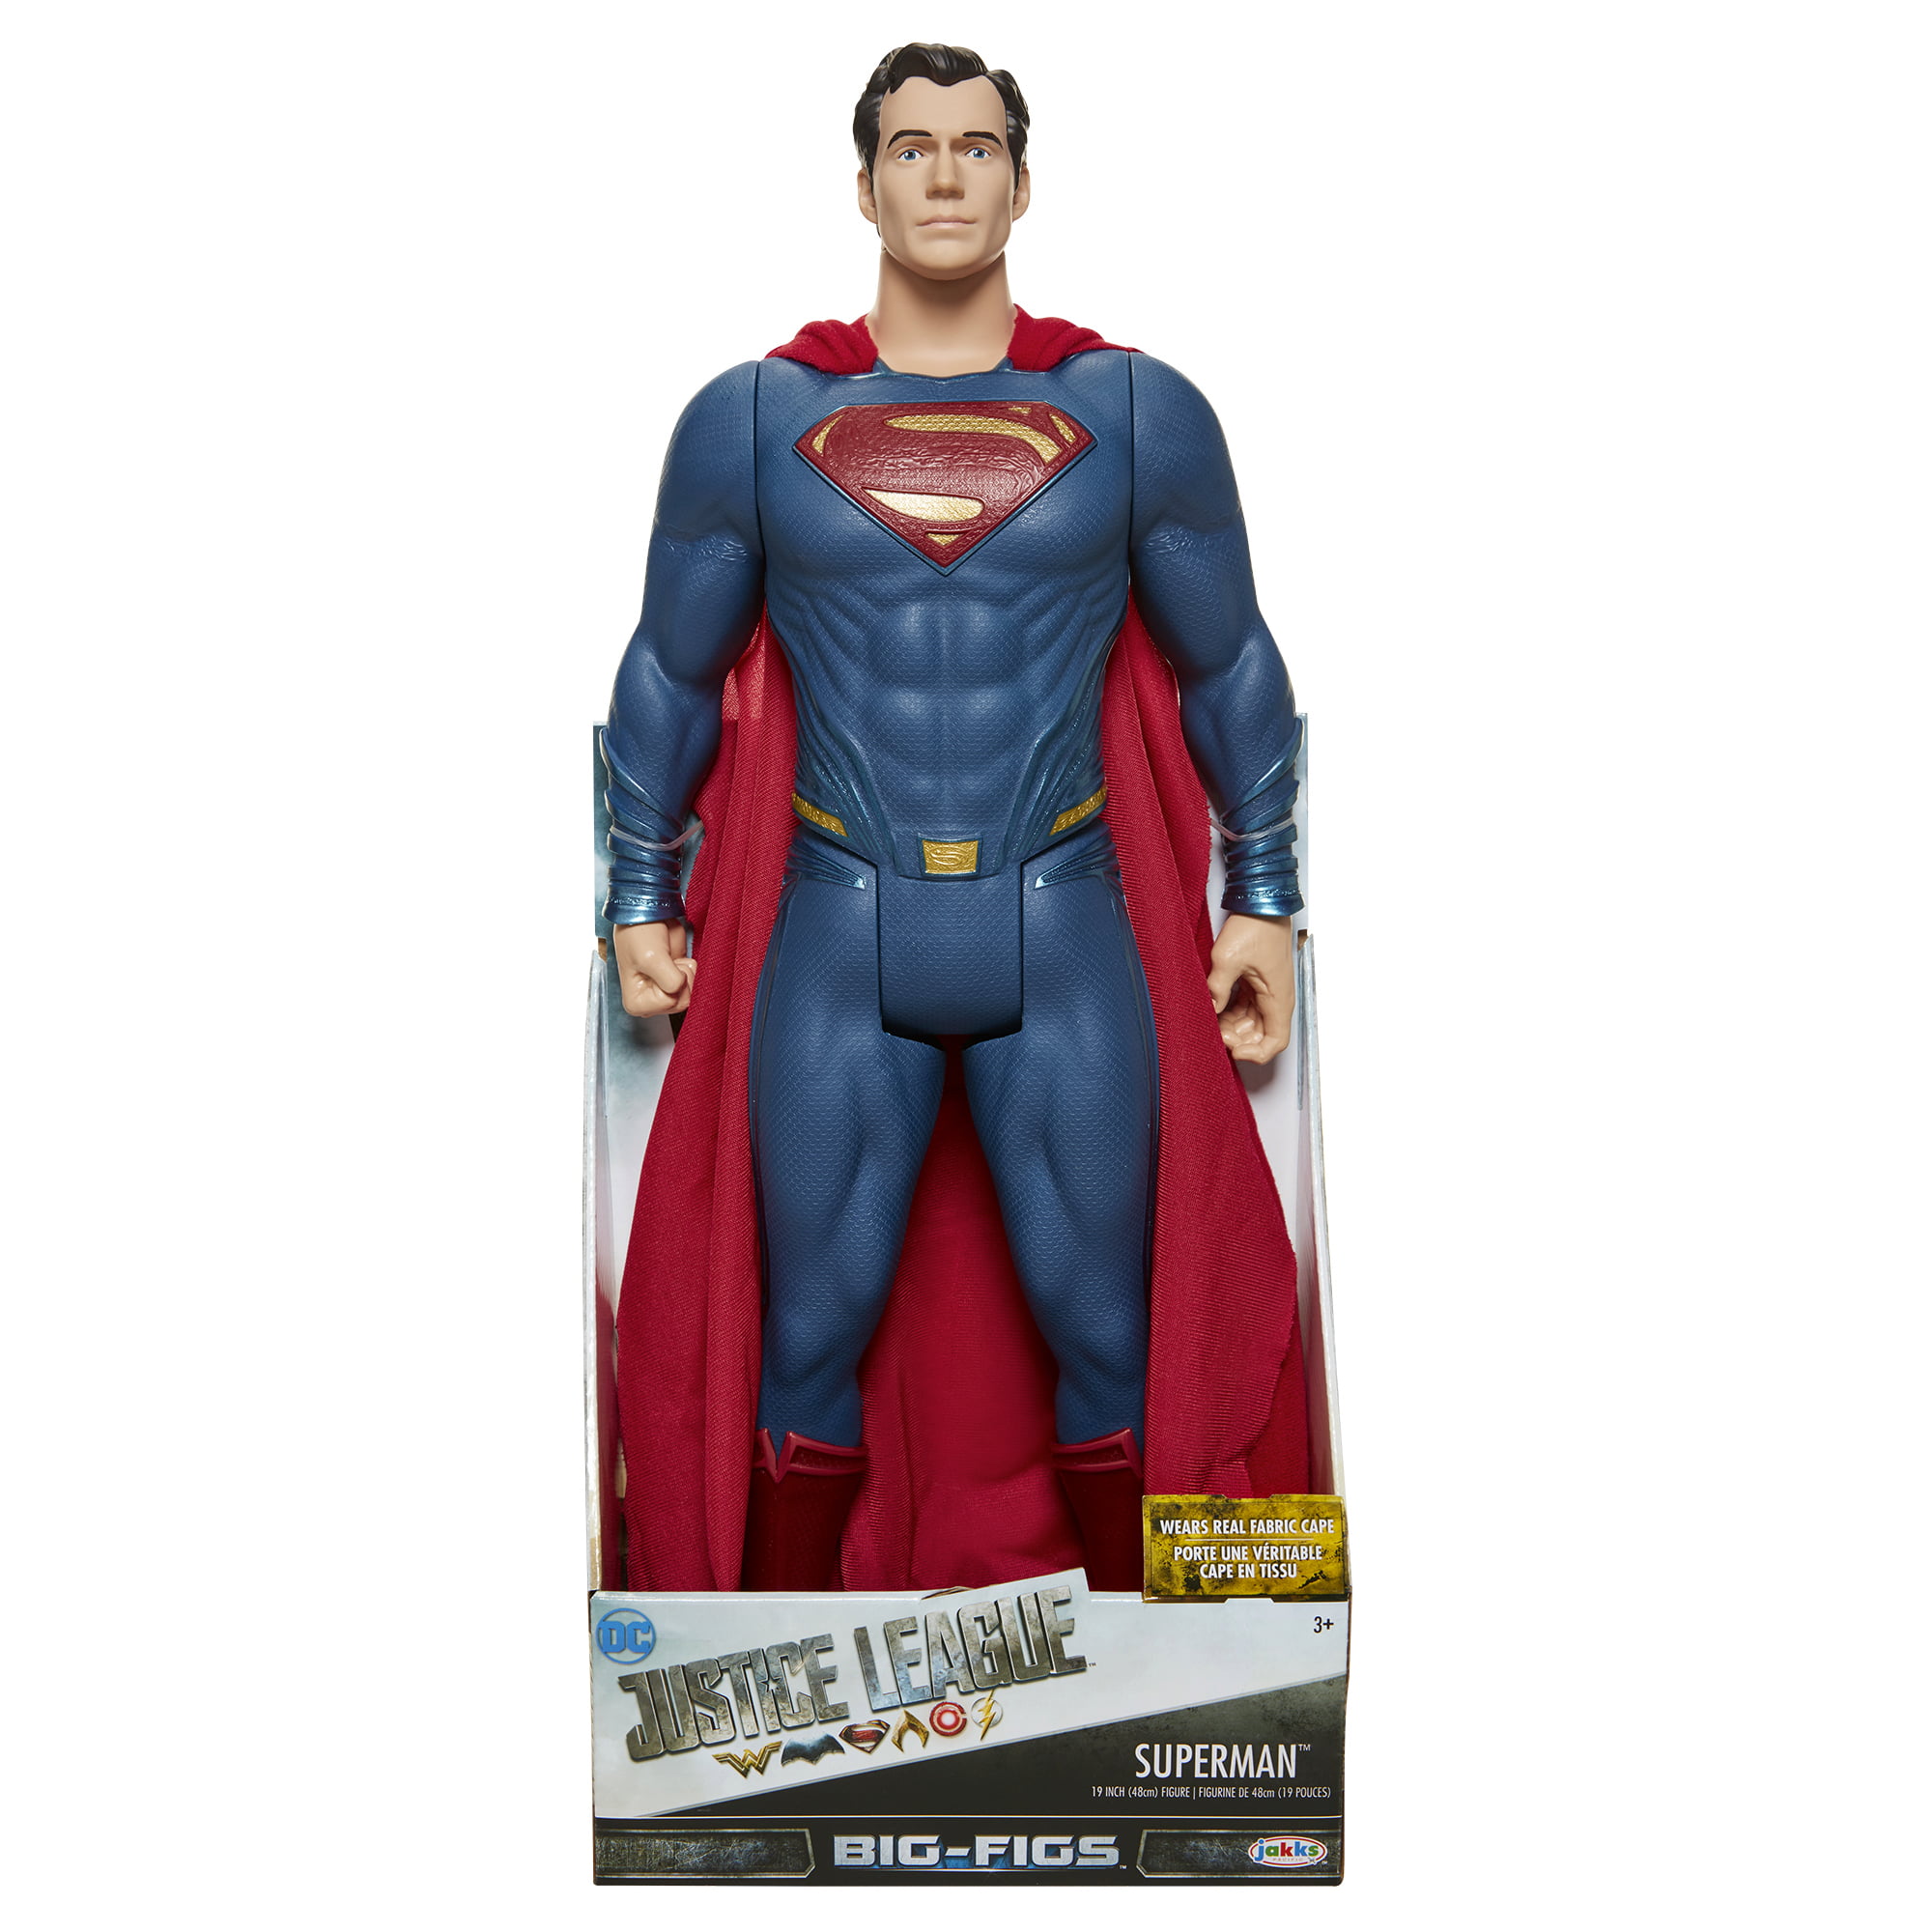 Superman Model 25014538 for sale online DC Comics Big Figs 20 Inch Action Figure 